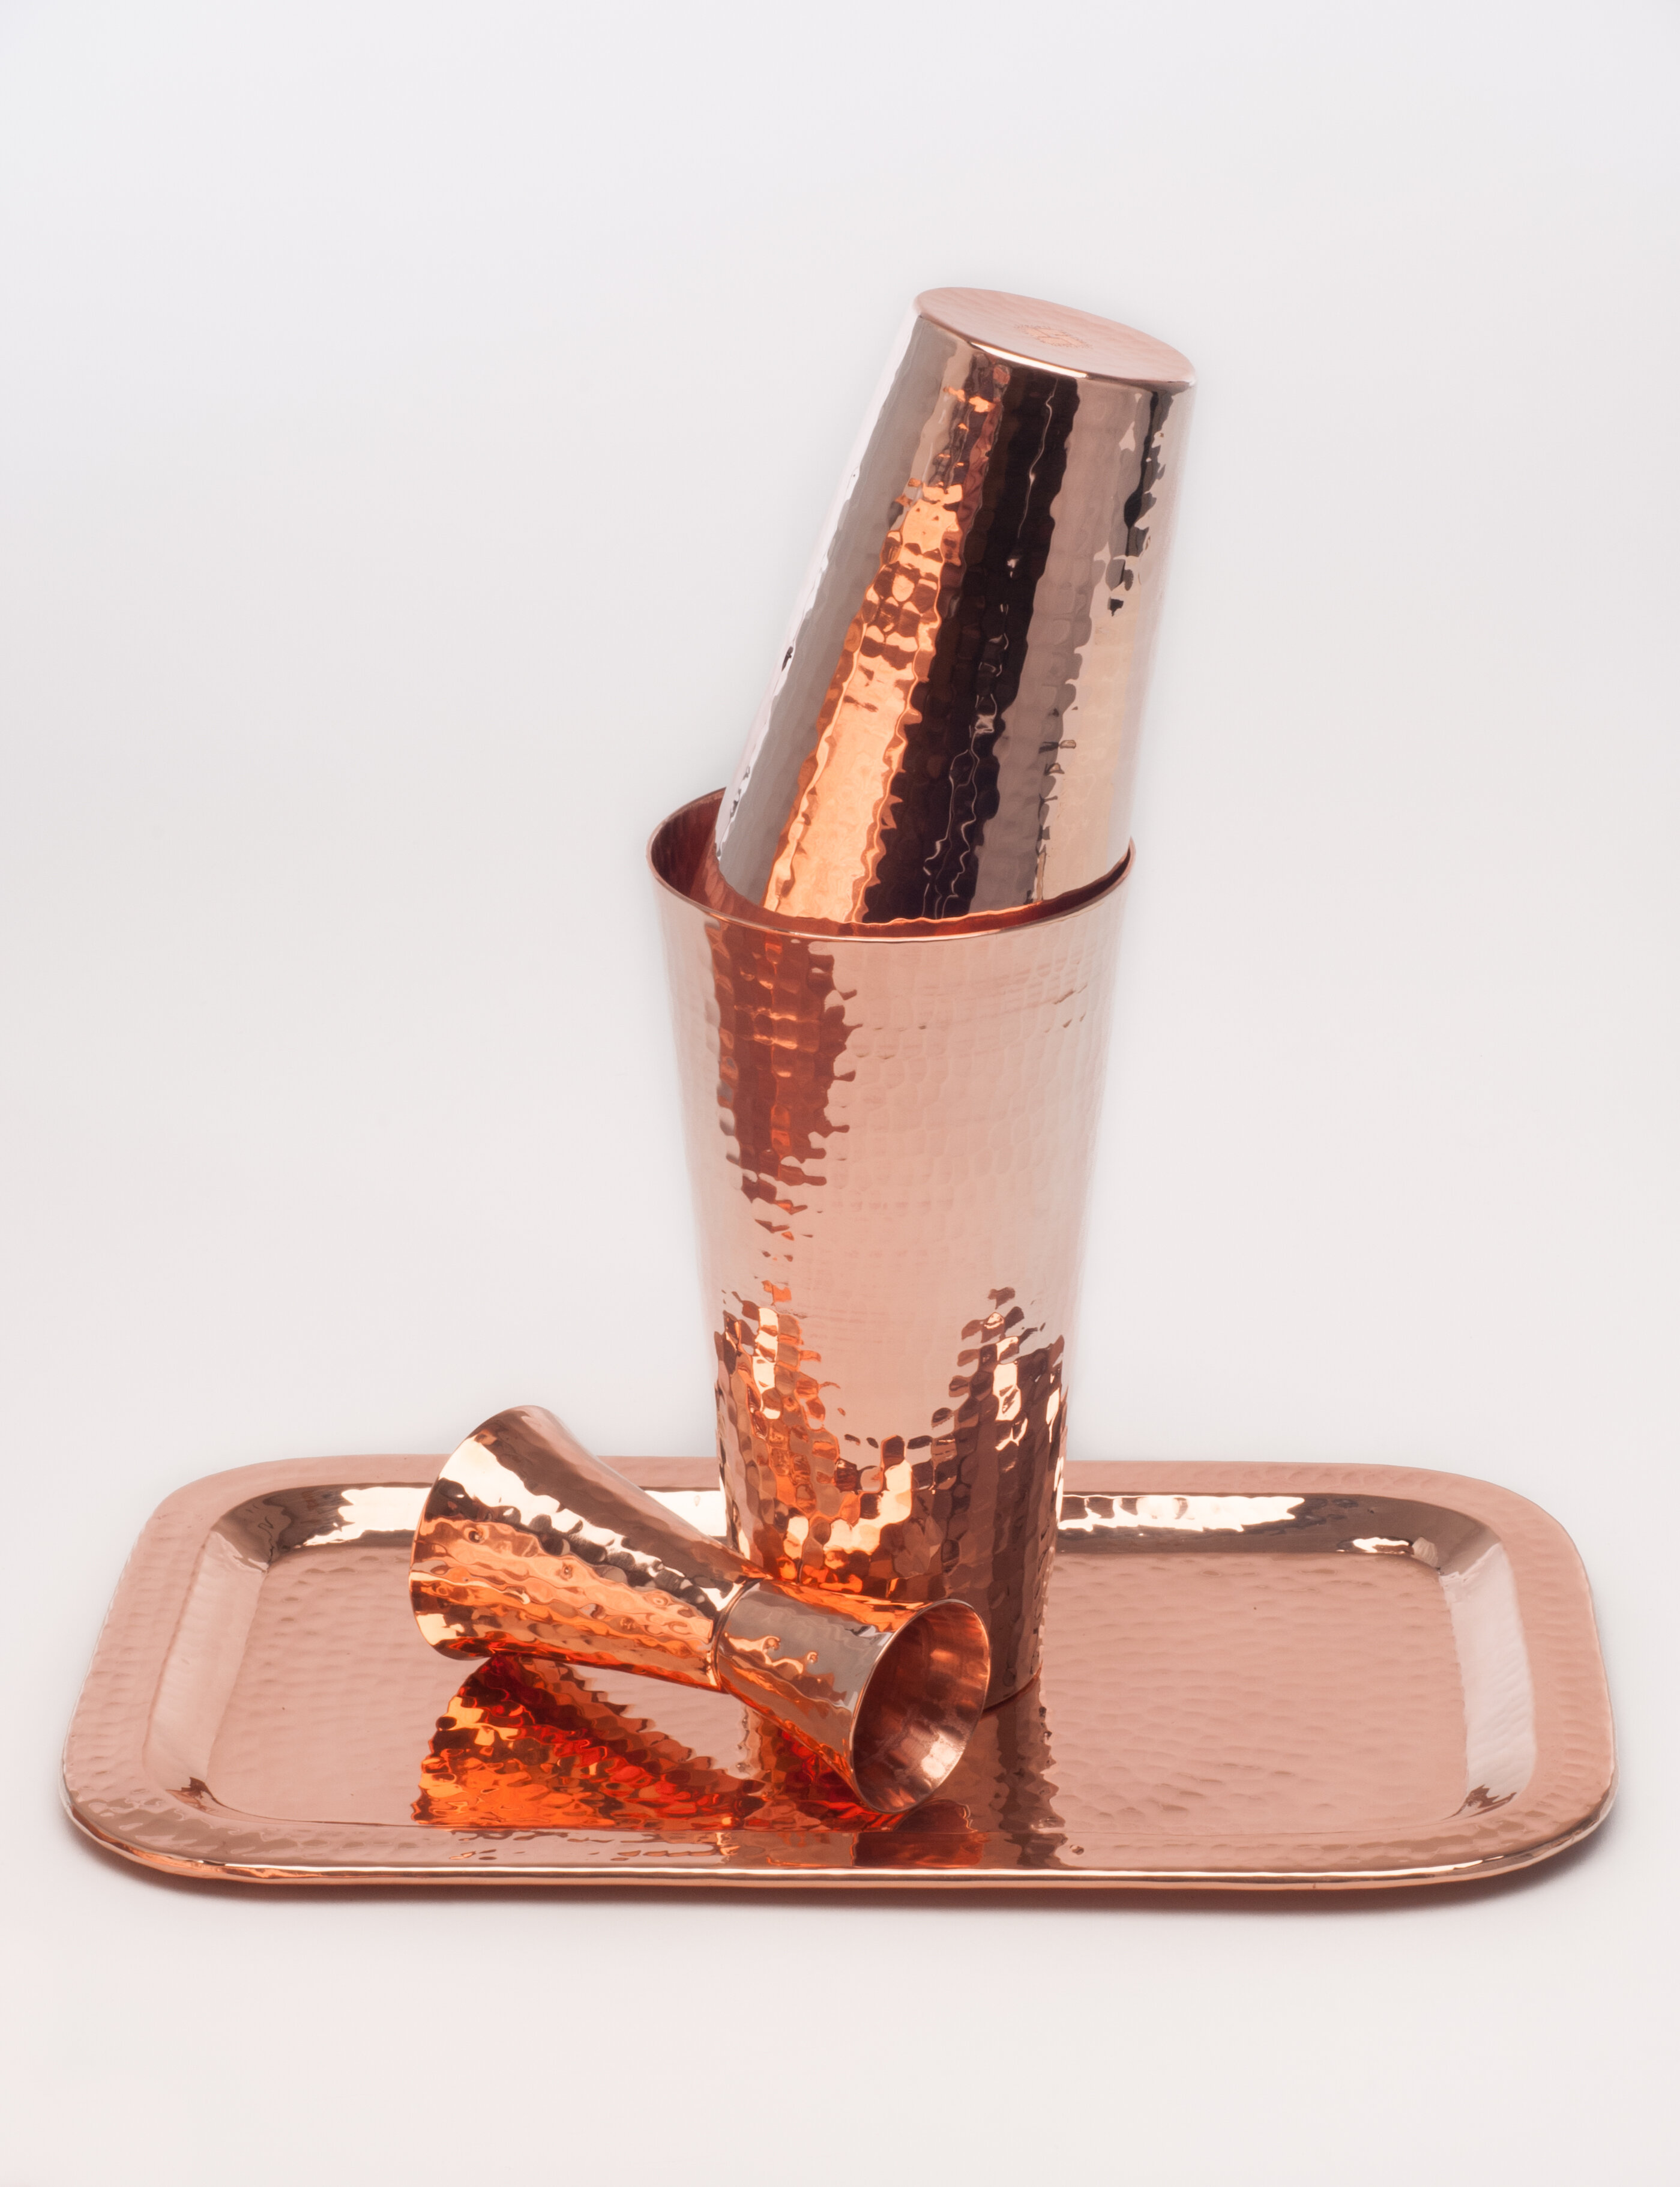 Copper Martini Cocktail Cup by Sertodo